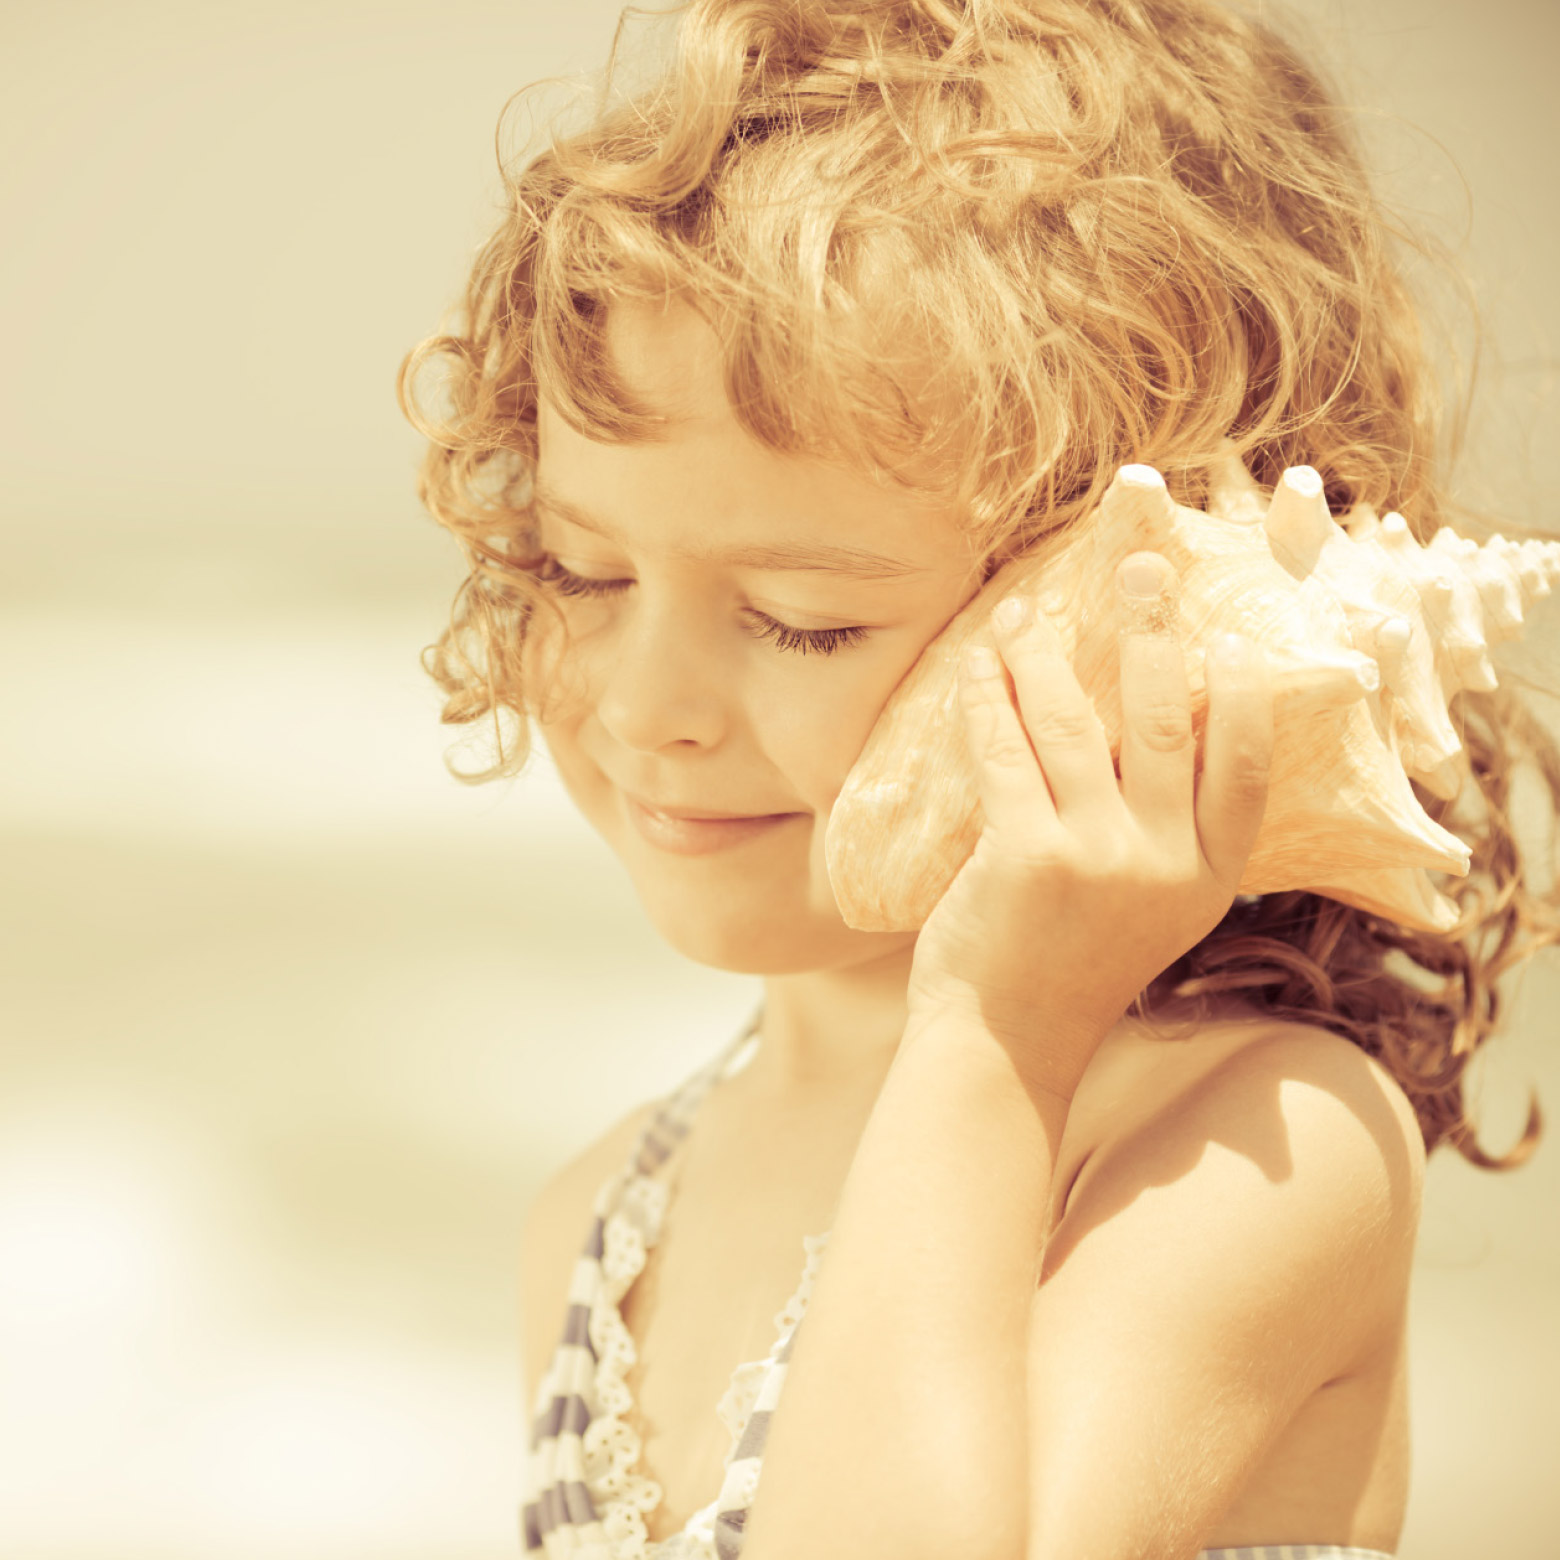 Child holding shell